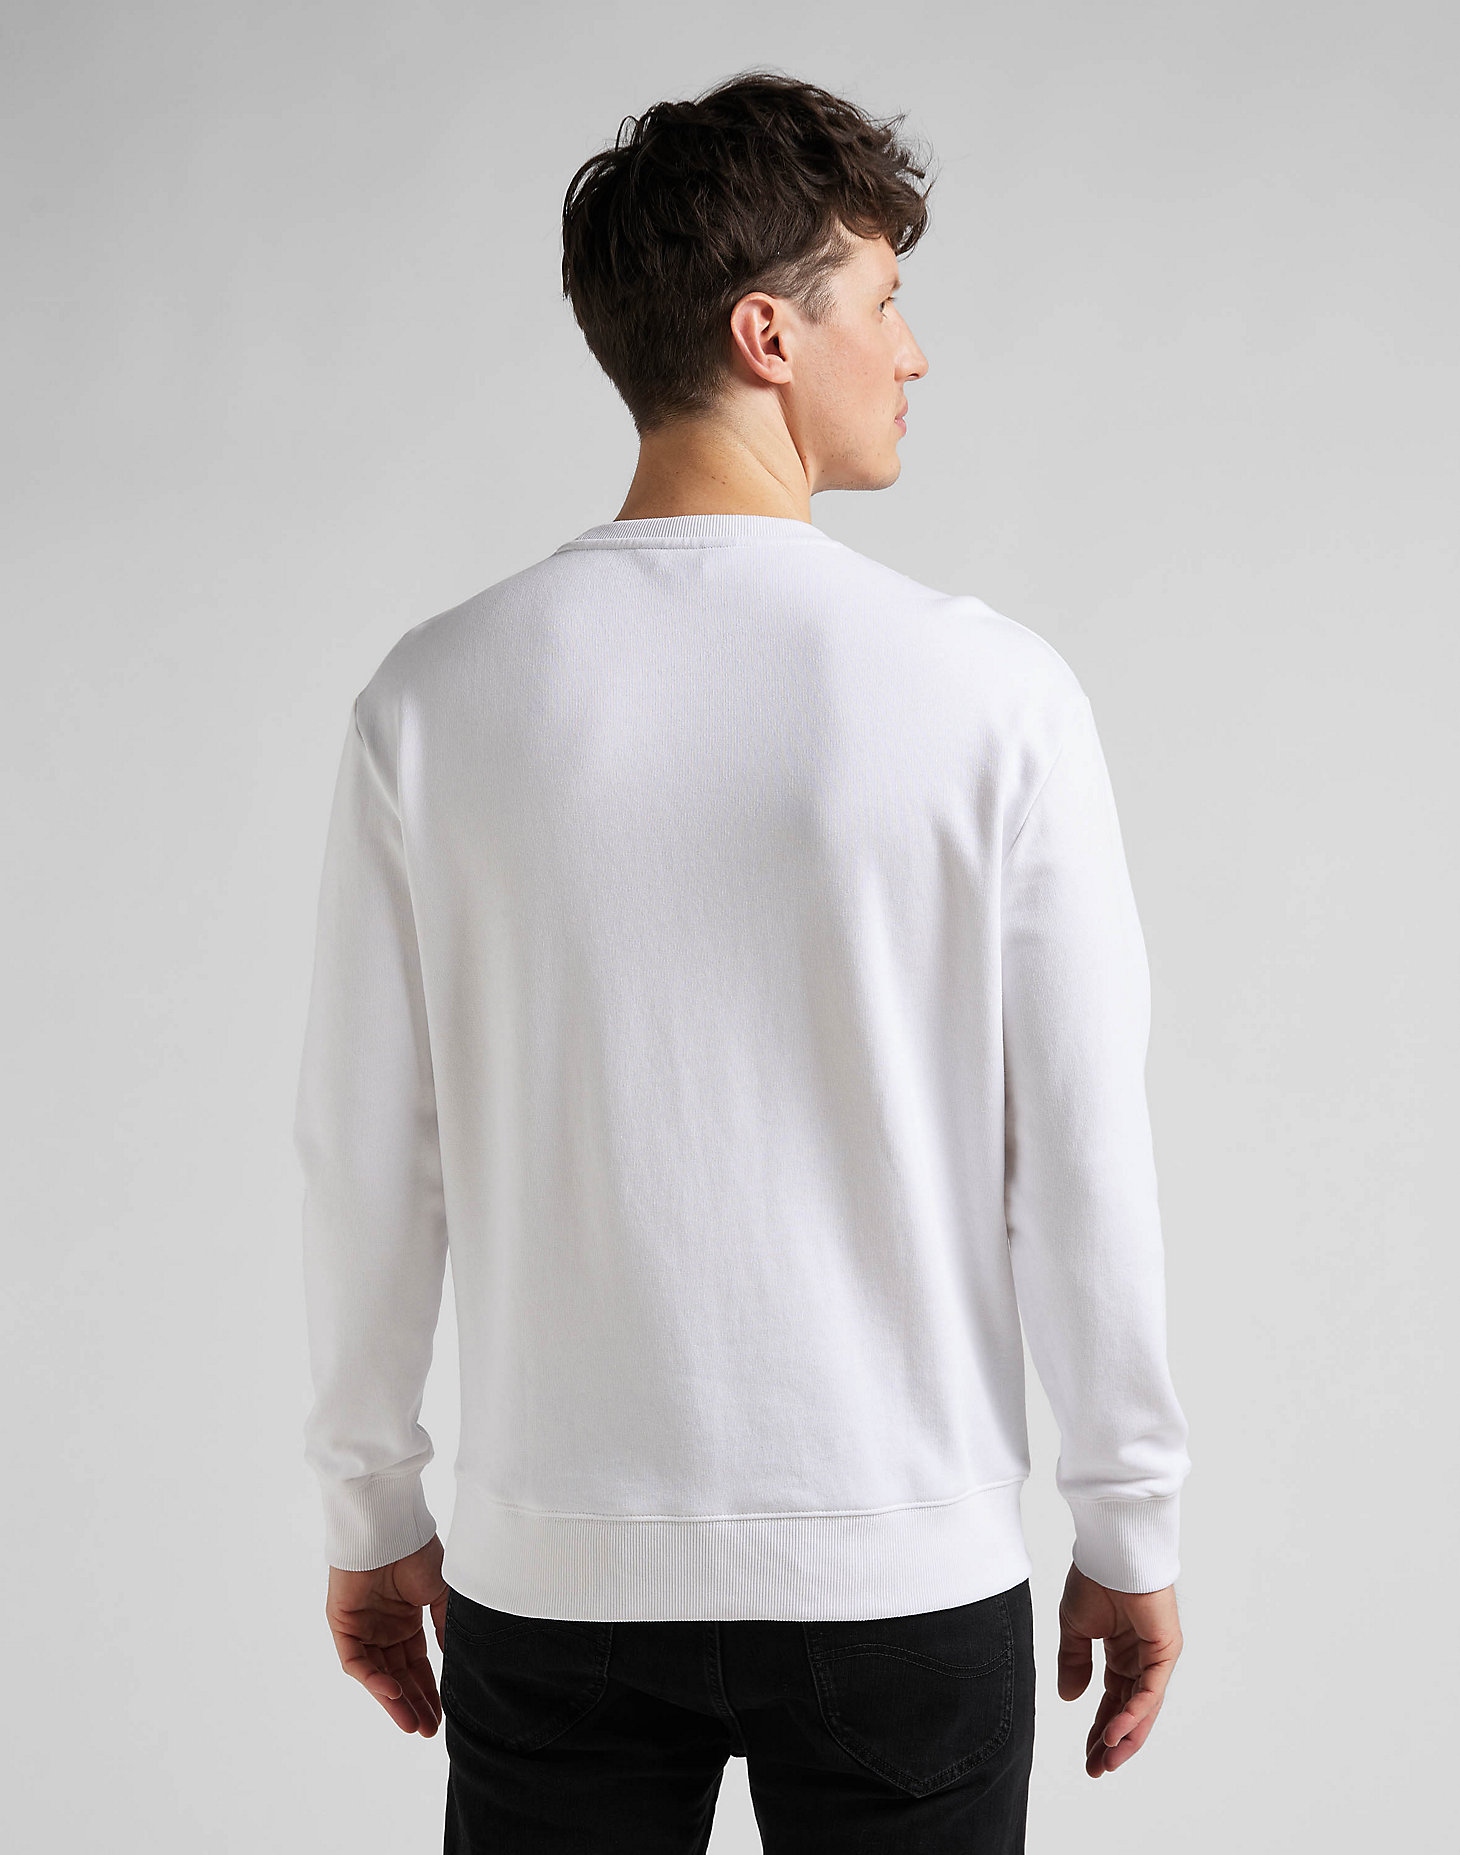 Wobbly Lee Sweatshirt in Bright White alternative view 1